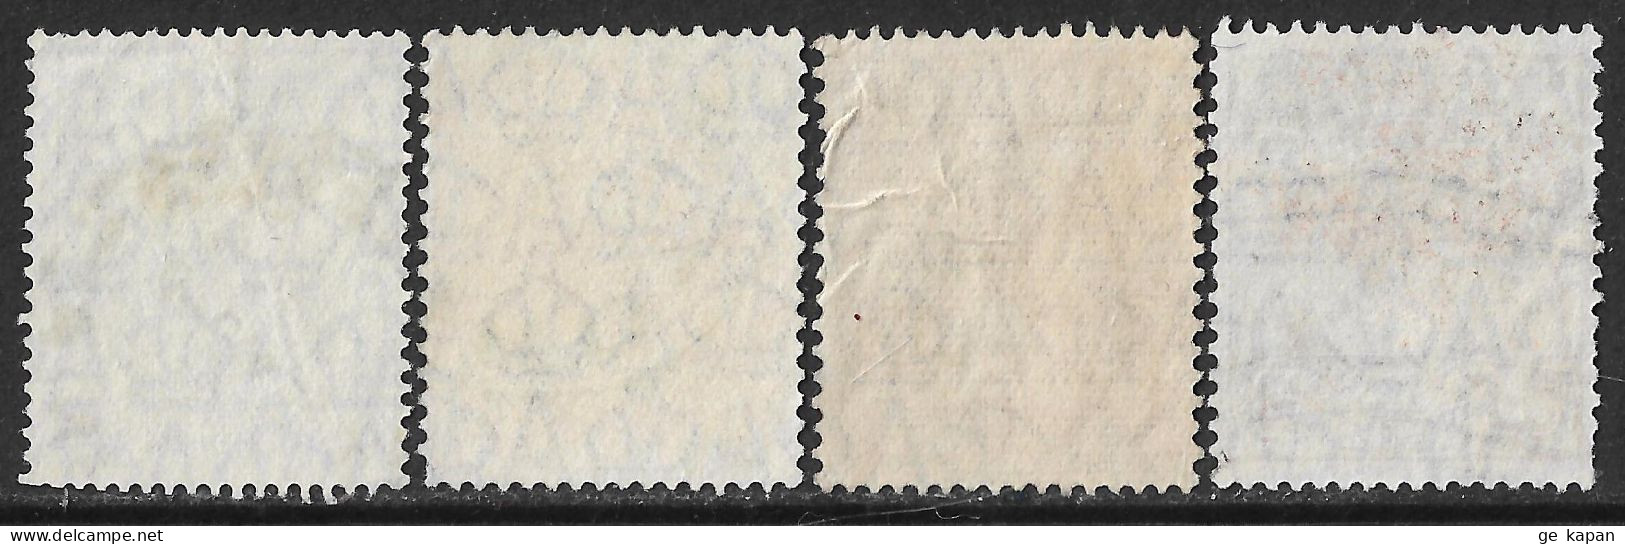 1926-1930 AUSTRALIA SET OF 4 USED STAMPS (Scott # 67b,68,68c,71) CV $7.75 - Used Stamps